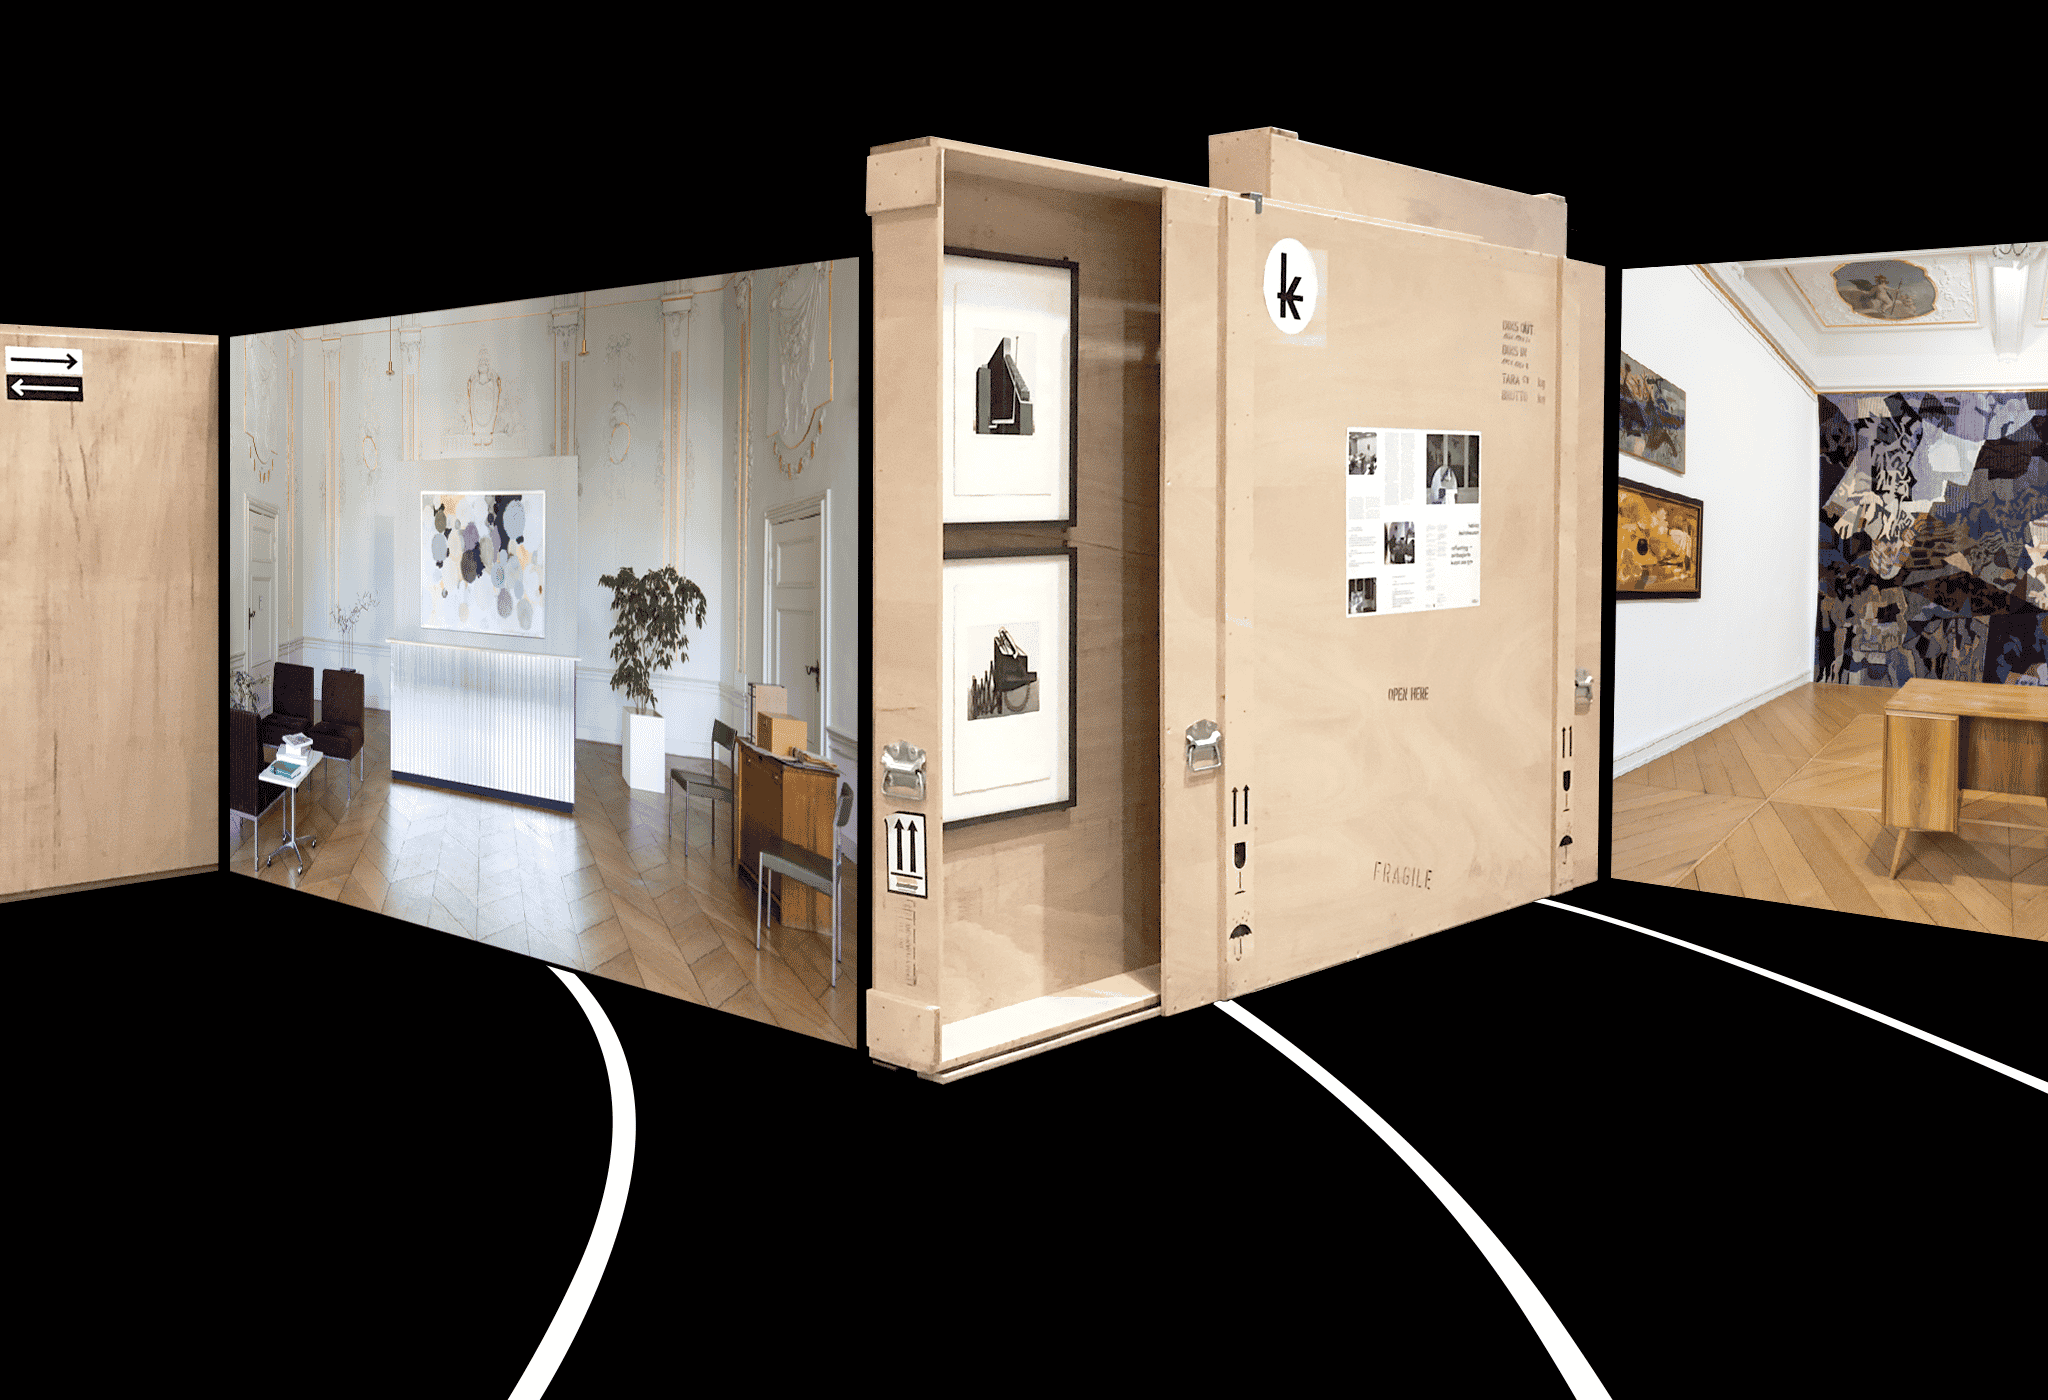 Tapezierte + beschriftete Transportkisten / Art transport boxes with wallpaper